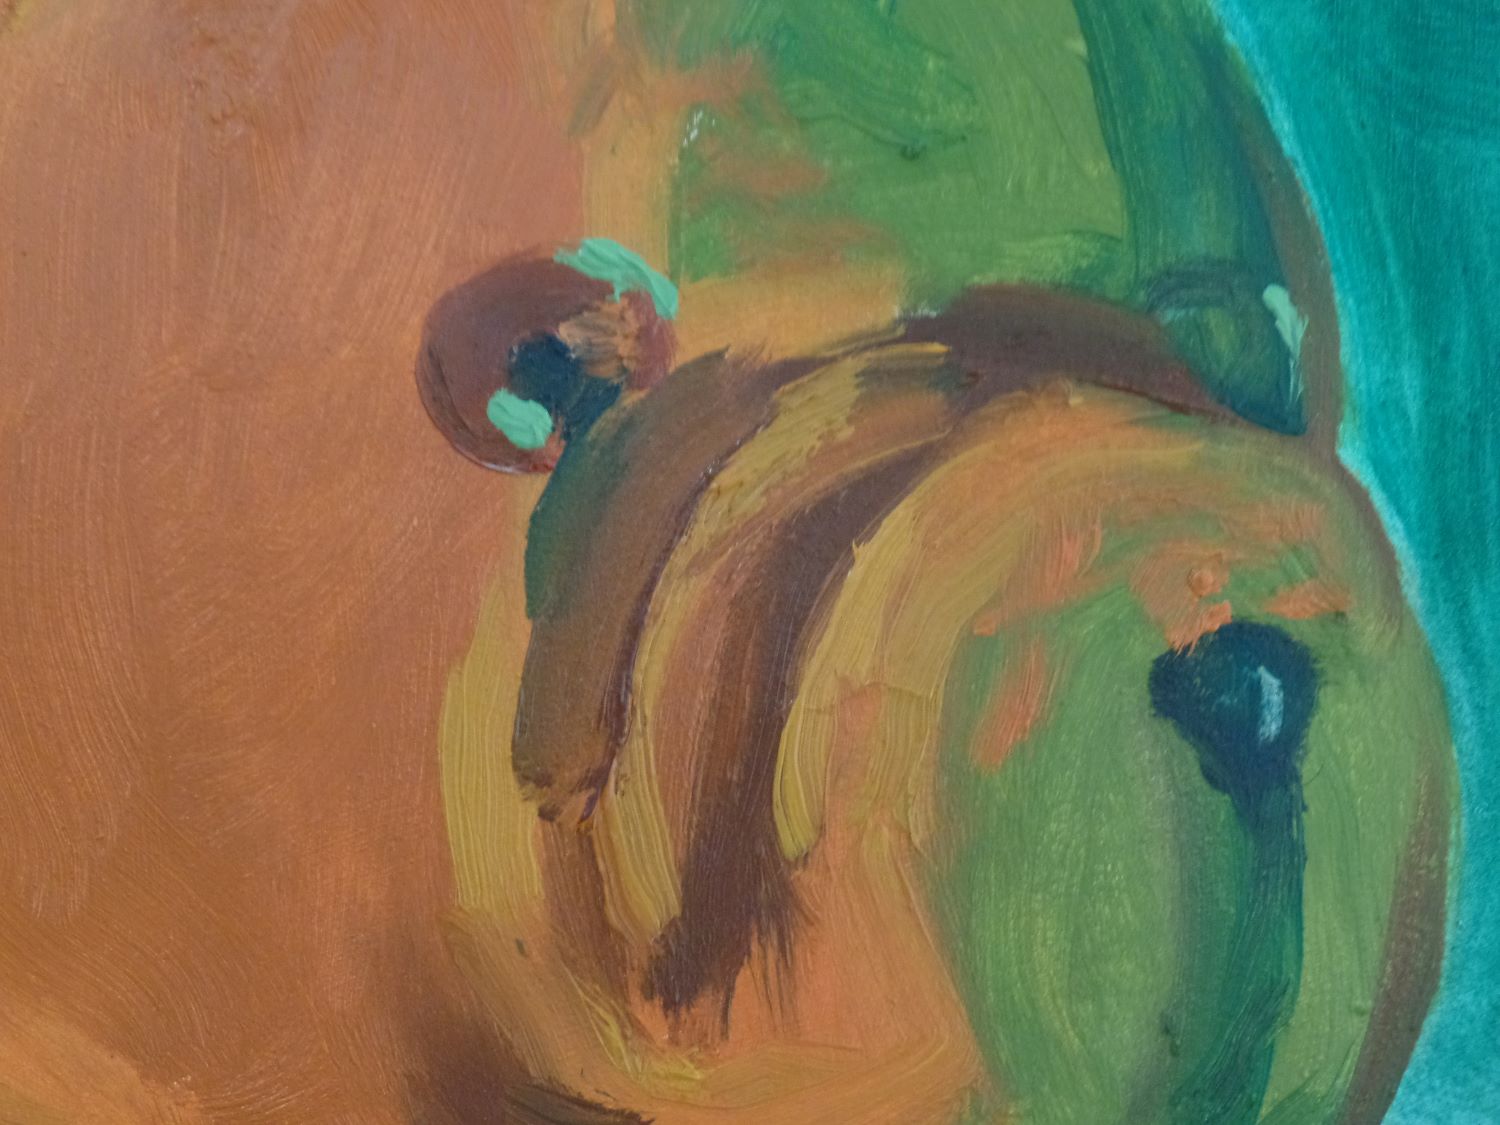 Close up of a painting of a bear stuffed animal under cyan light.